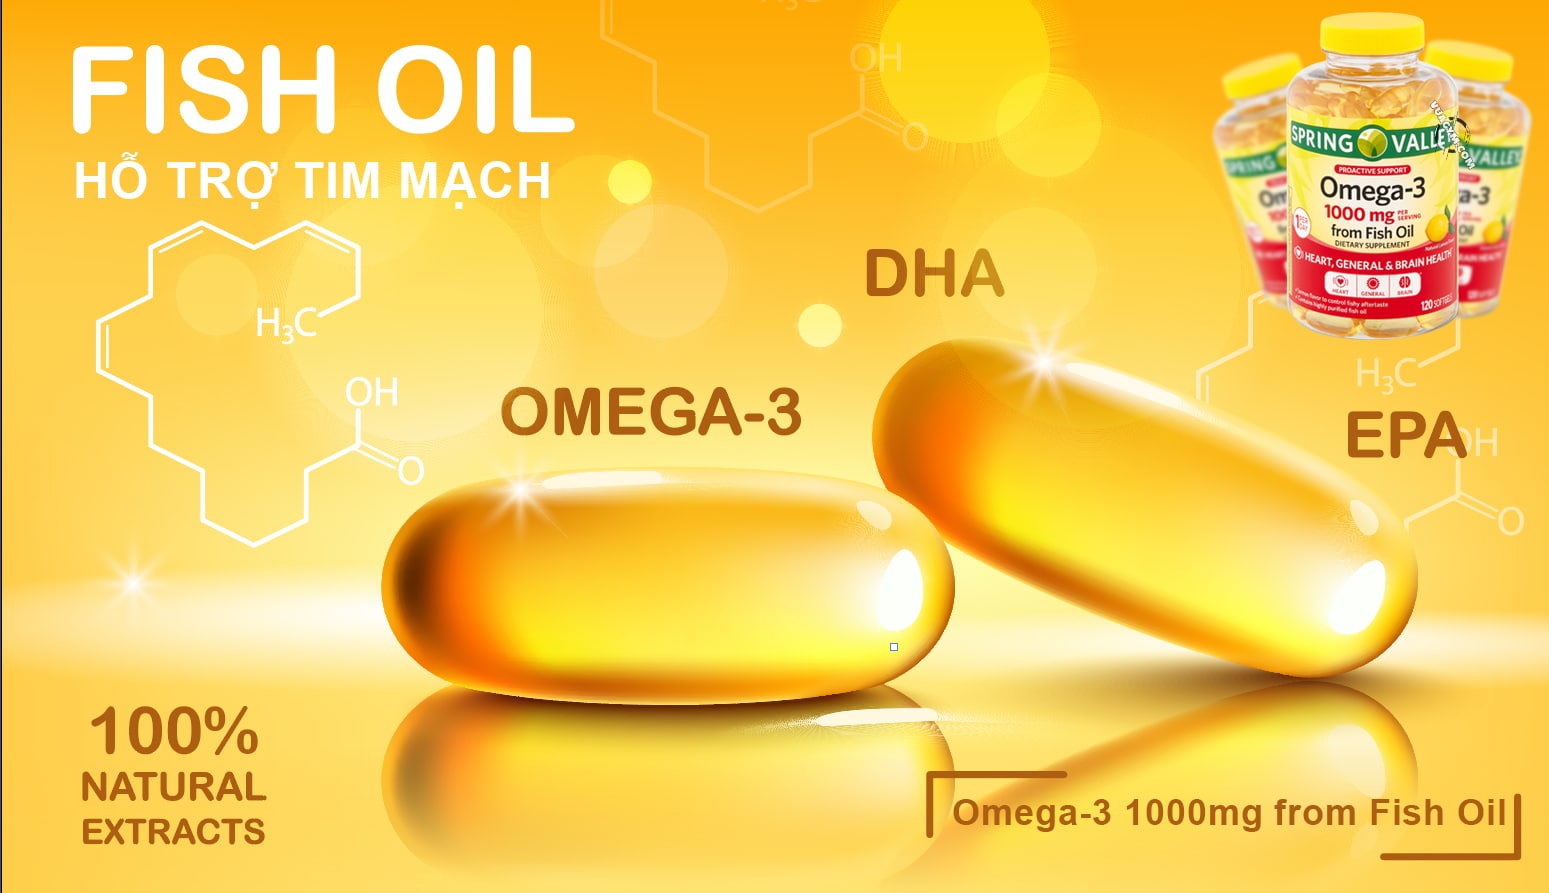 Spring Valley - Omega-3 1000mg from Fish Oil (180 viên) - omega 3 sring